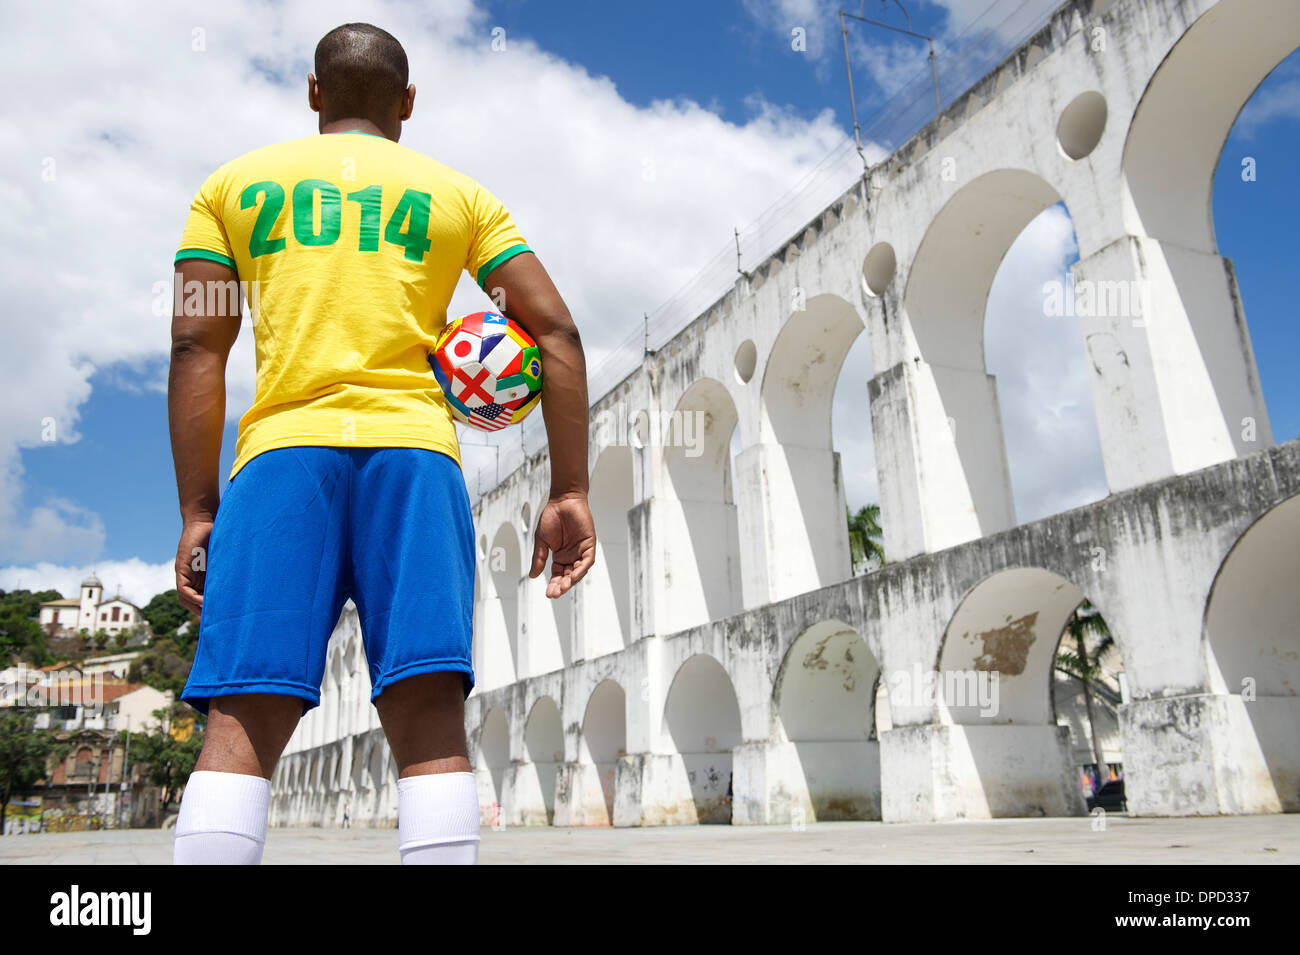 Brazilian soccer player holding international football wearing 2014 shirt in Brazil colors Rio de Janeiro Stock Photo